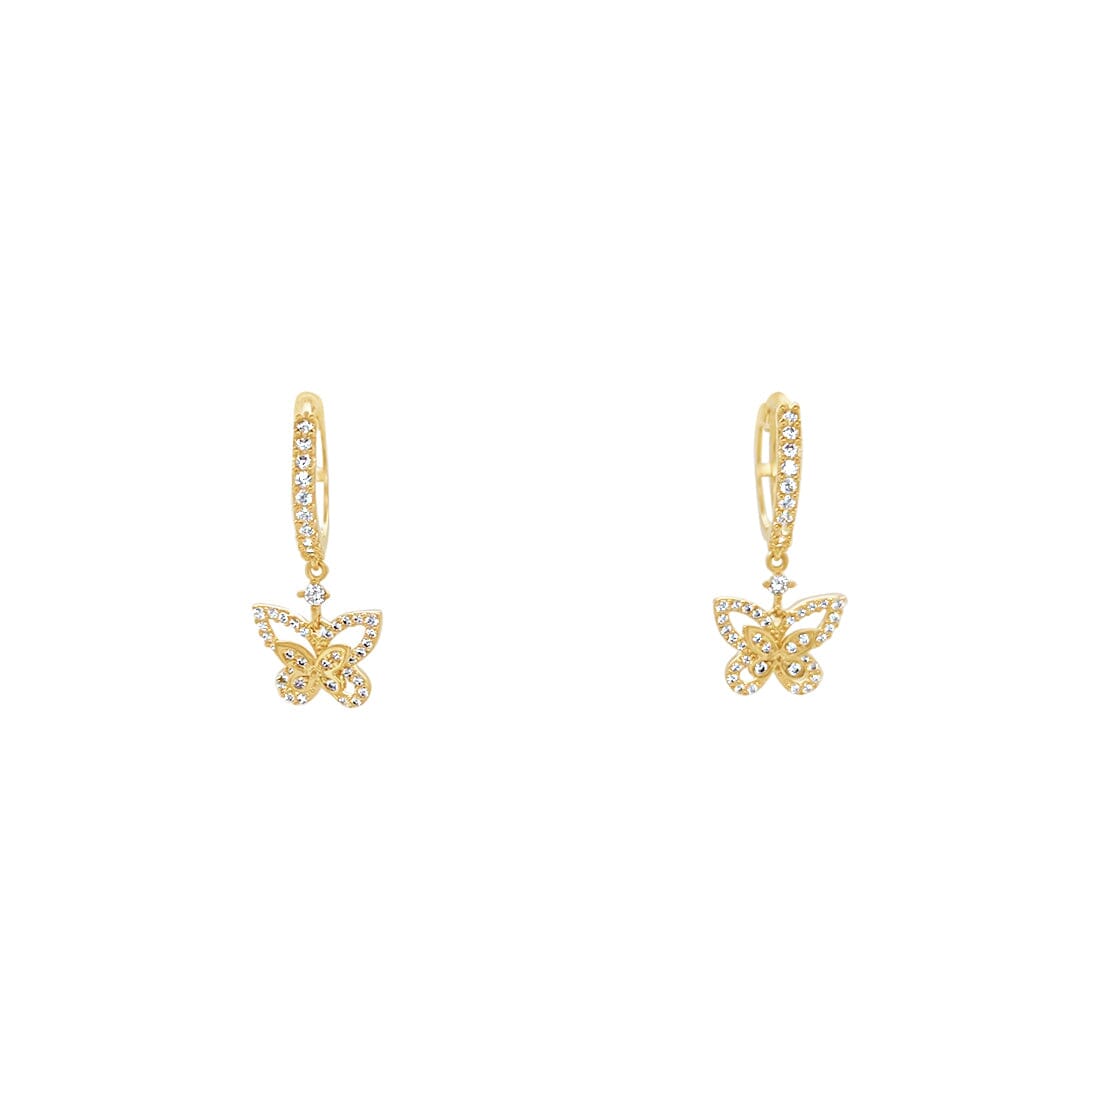 Butterfly Hoop Drop Earrings with Cubic Zirconia in 9ct Yellow Gold Earrings Bevilles 